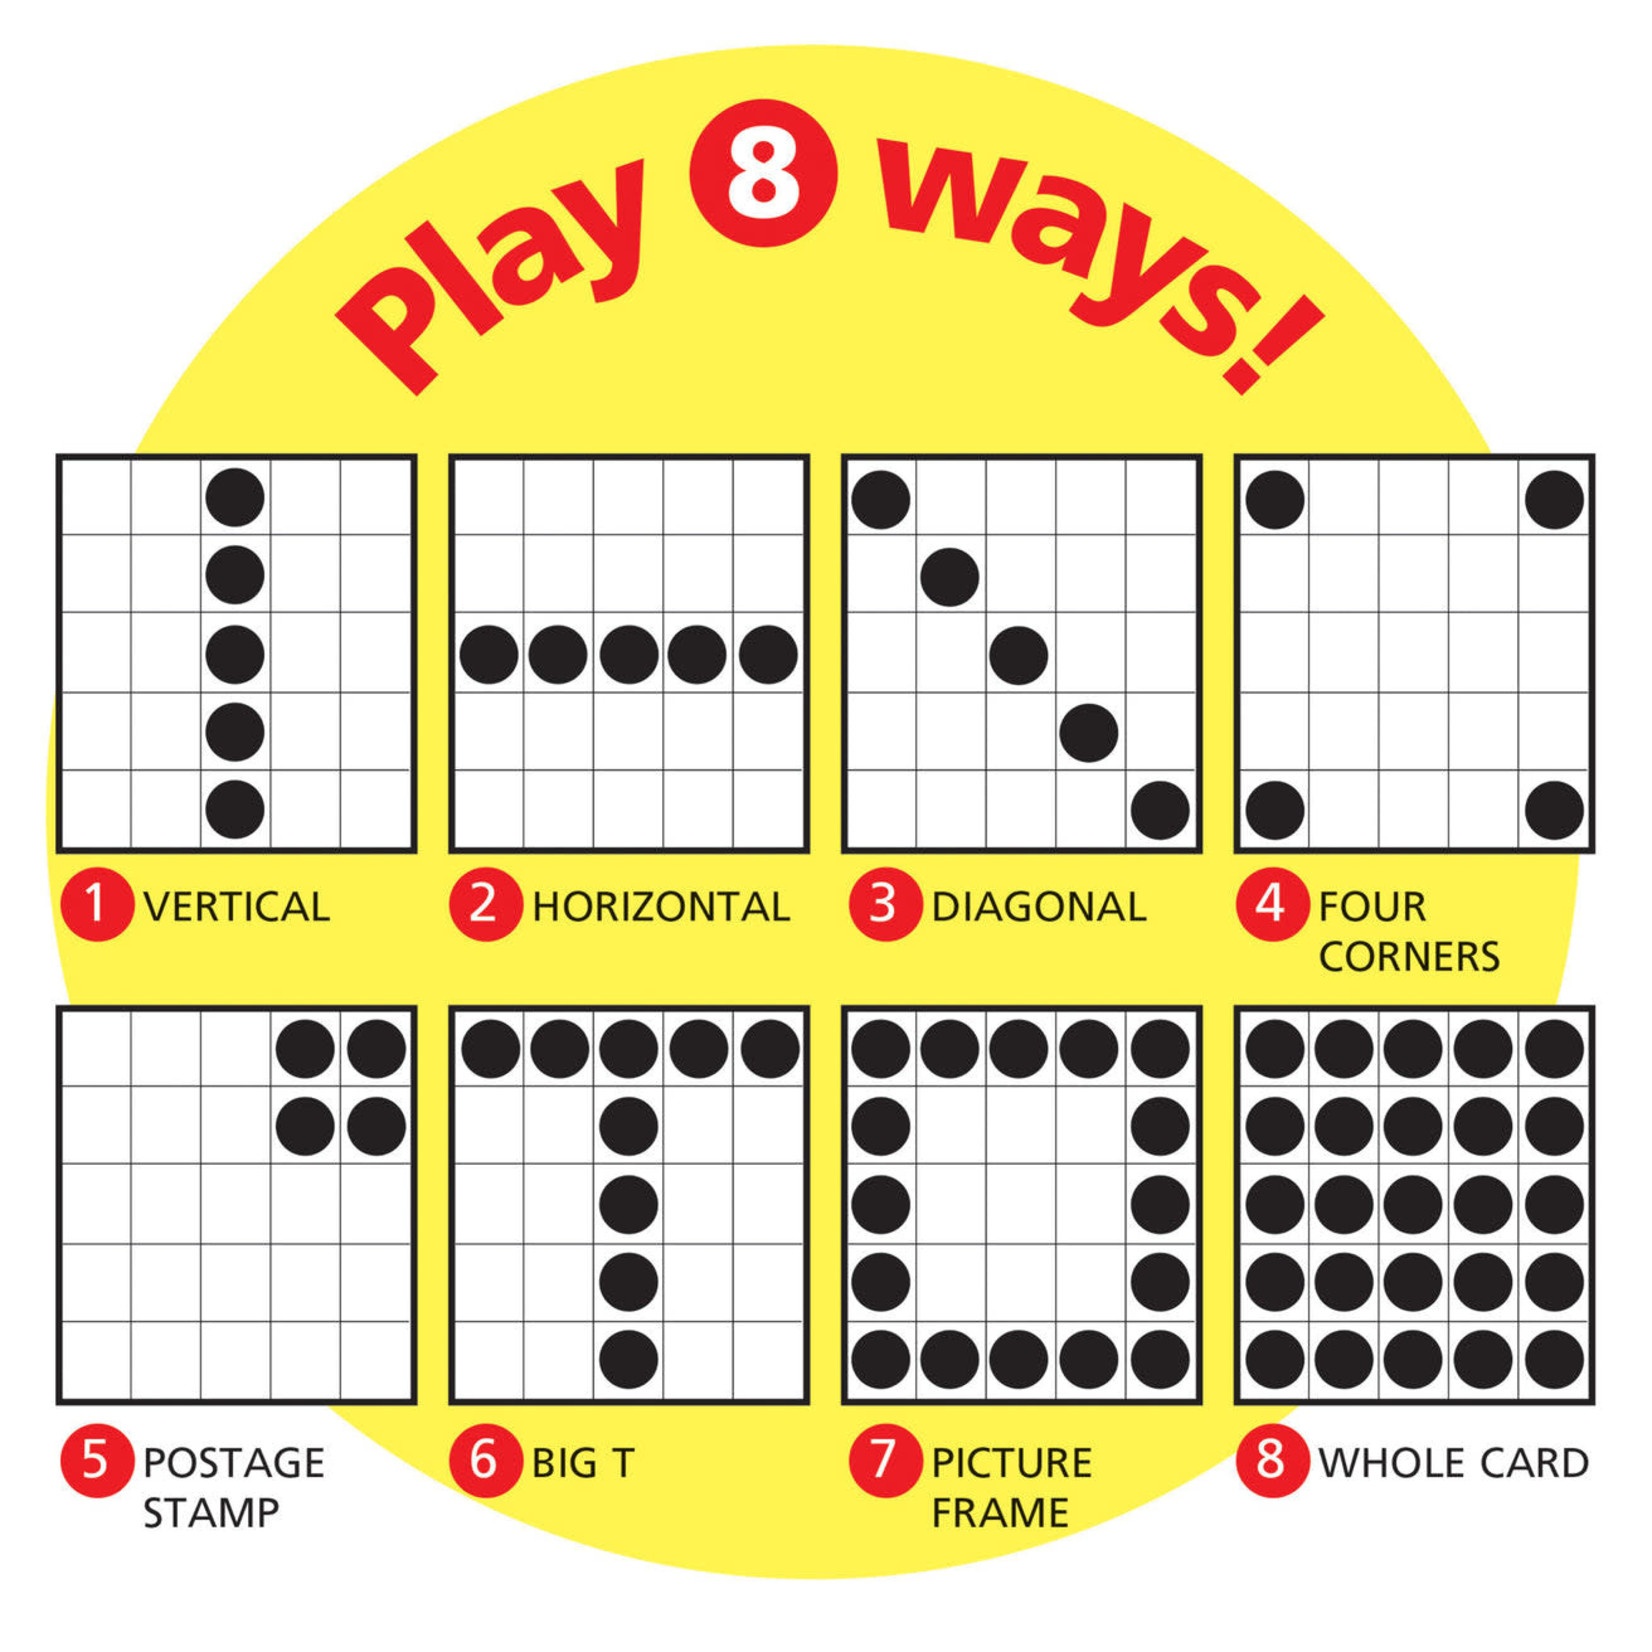 TREND ENTERPRISES INC Multiplication Bingo Game